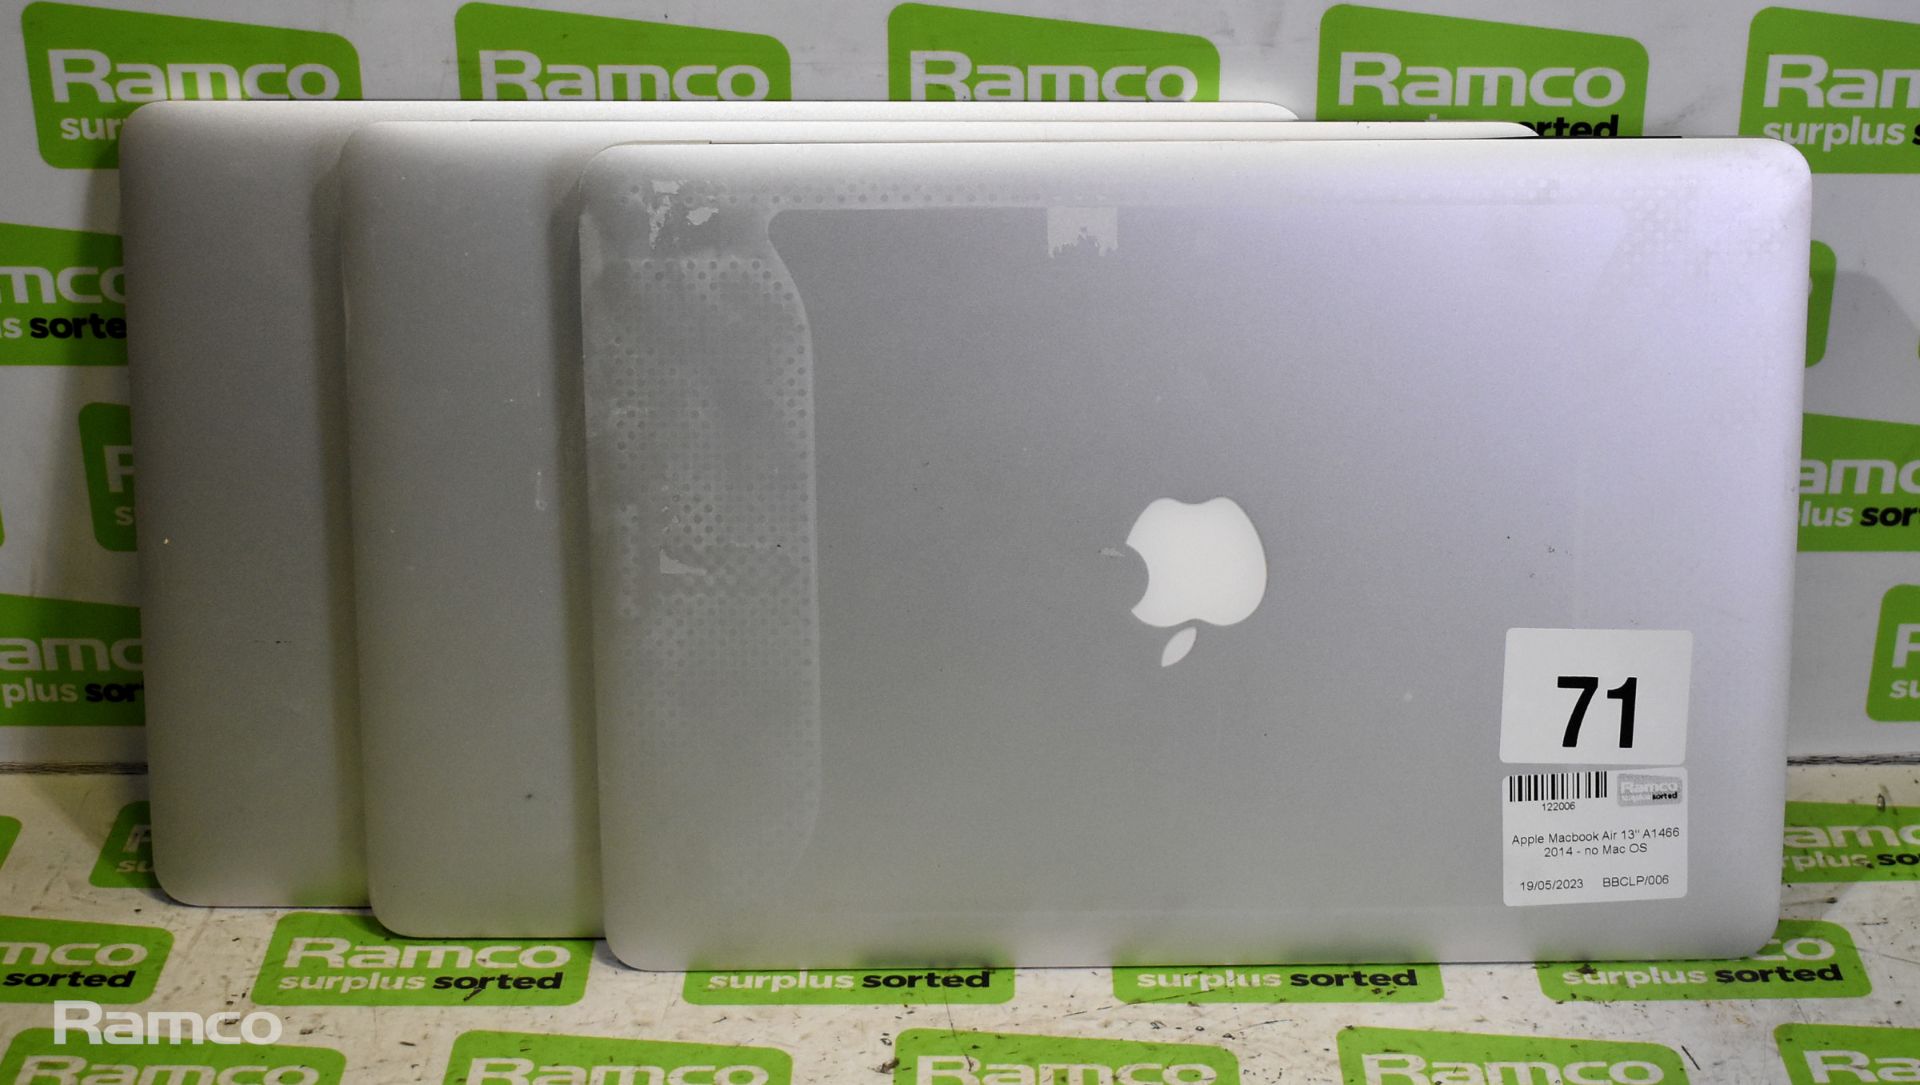 3x Apple Macbook Airs - 13 inch - A1466 - 2014 - full details in desc.